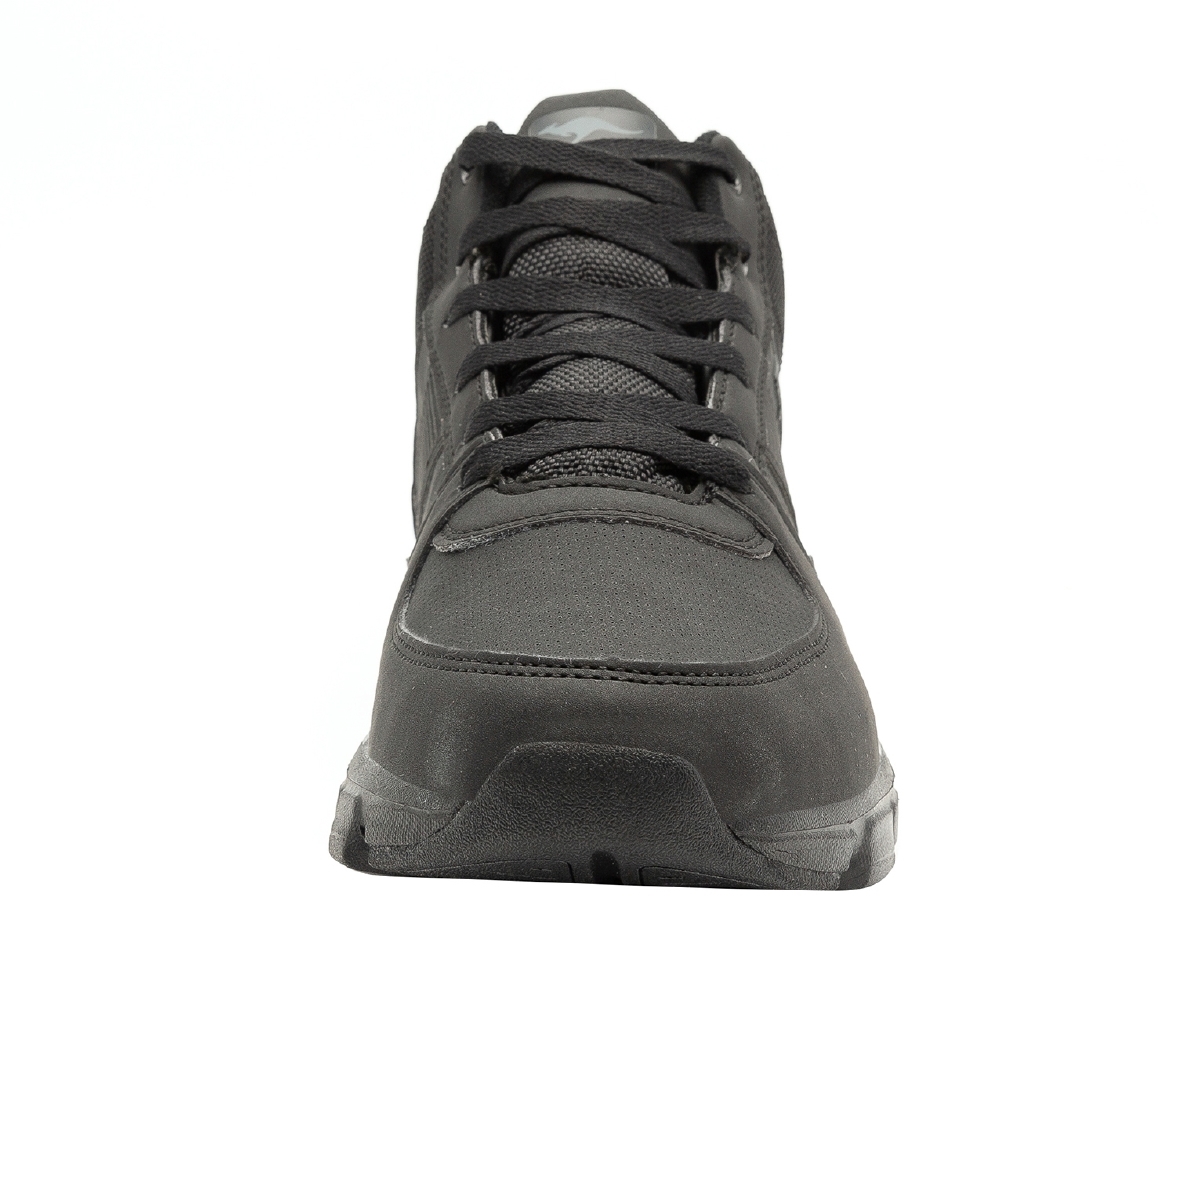 KangaROOS Blue Caspo RTX Schuhe Freizeit Mid Cut Sneaker Turnschuhe 79081-5500